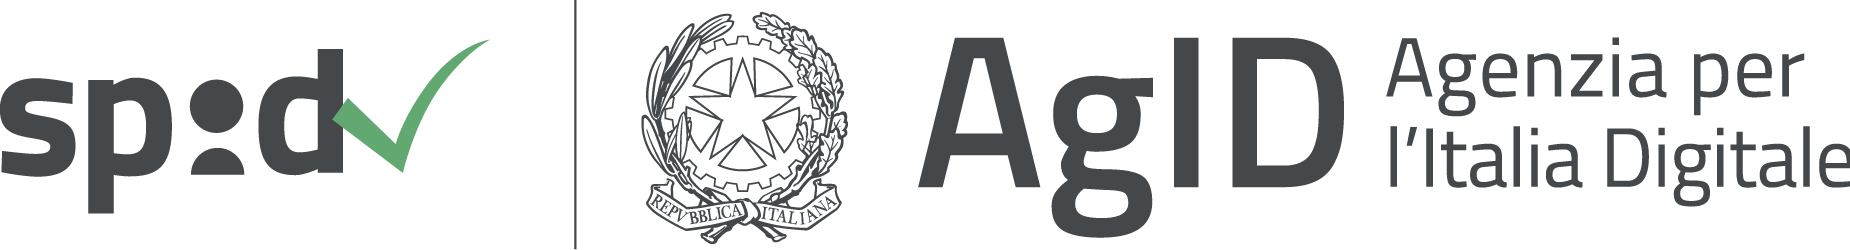 Logo SPID - AGID - Agenzia per l'Italia Digitale